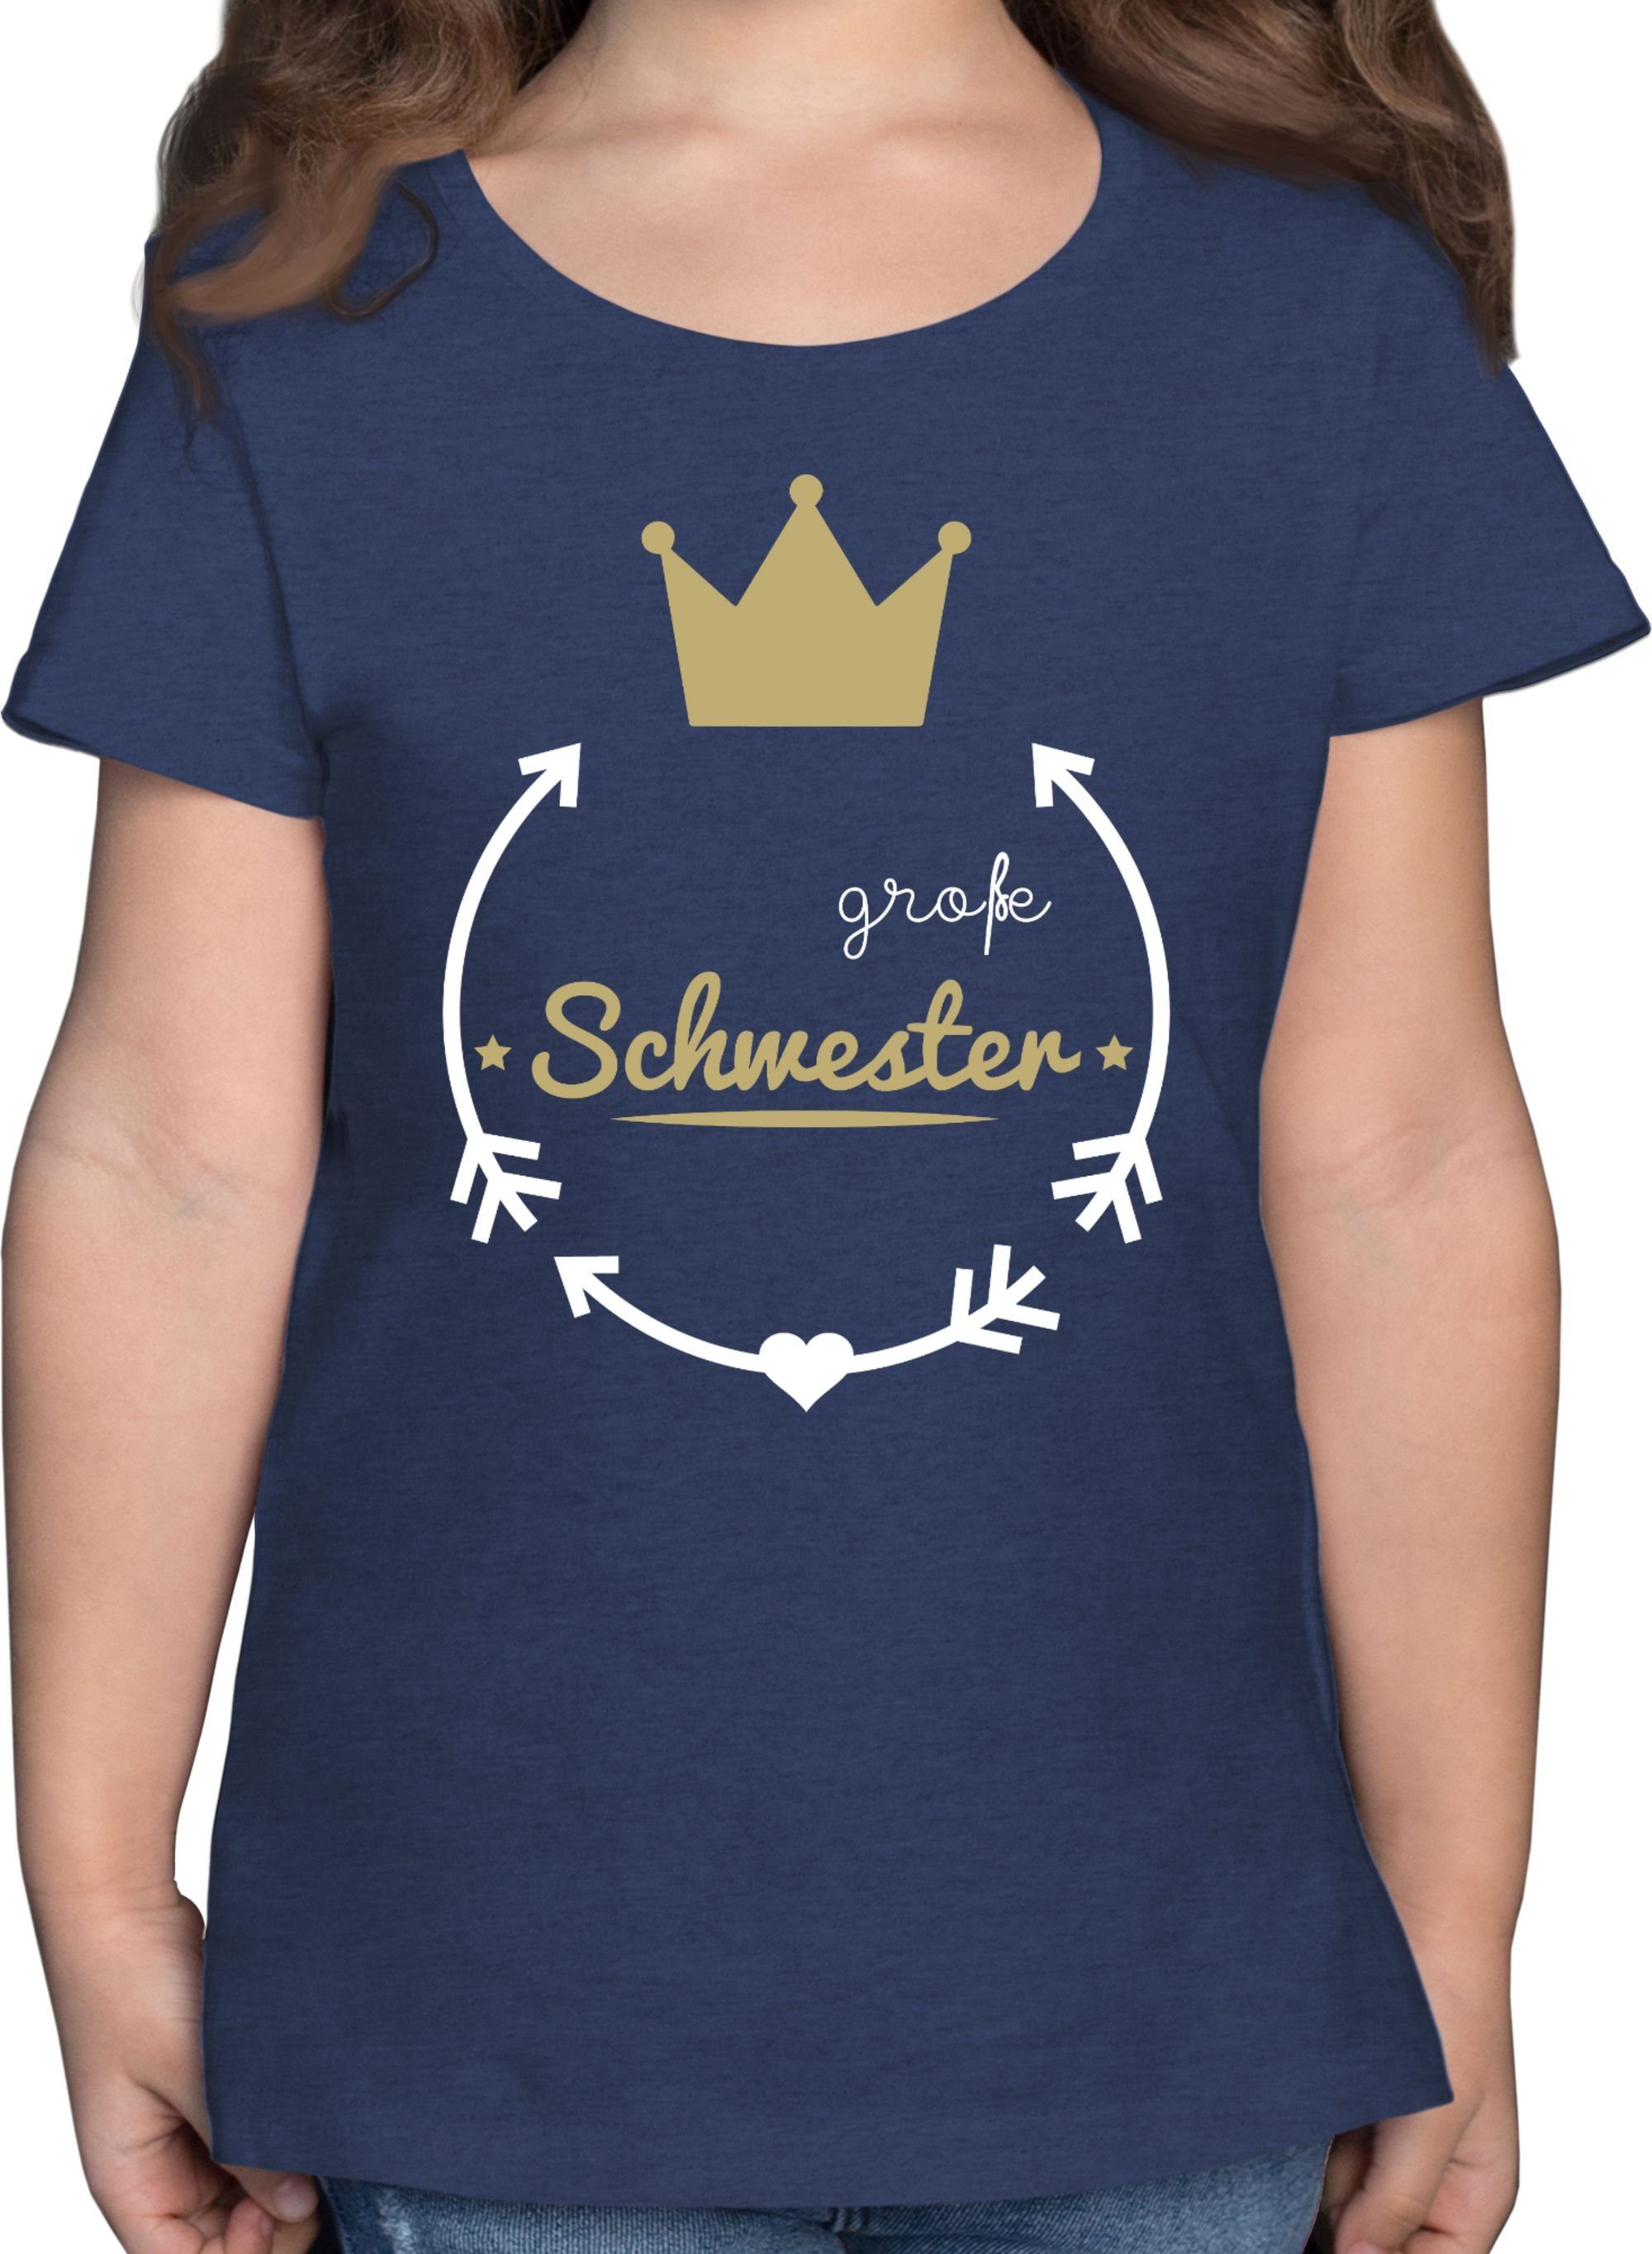 Shirtracer T-Shirt Große Schwester - Krone - Weiss Geschwister Schwester Geschenk 2 Dunkelblau Meliert